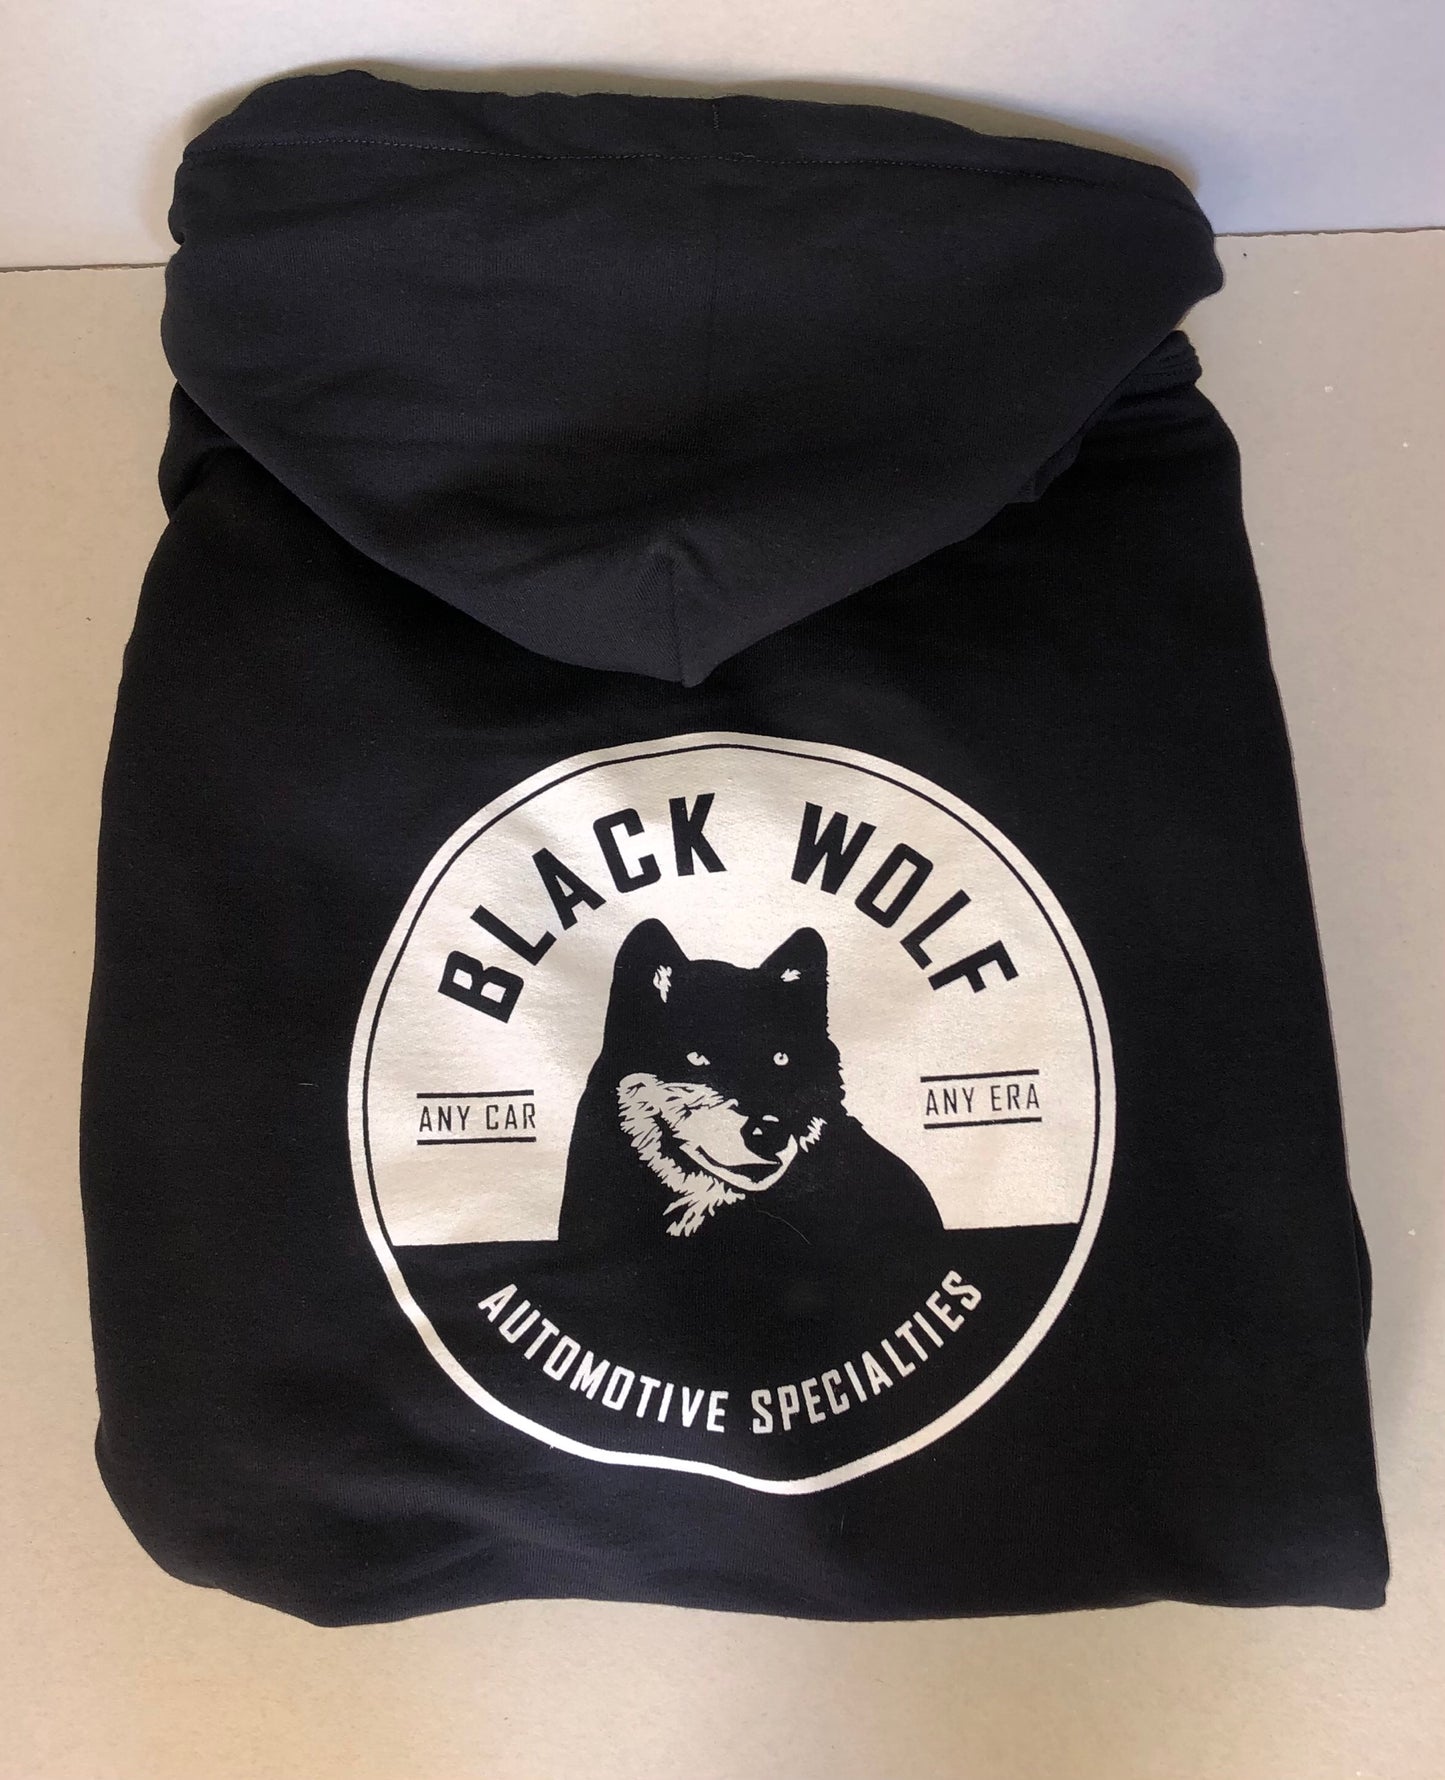 Hoodie with Black Wolf Logo